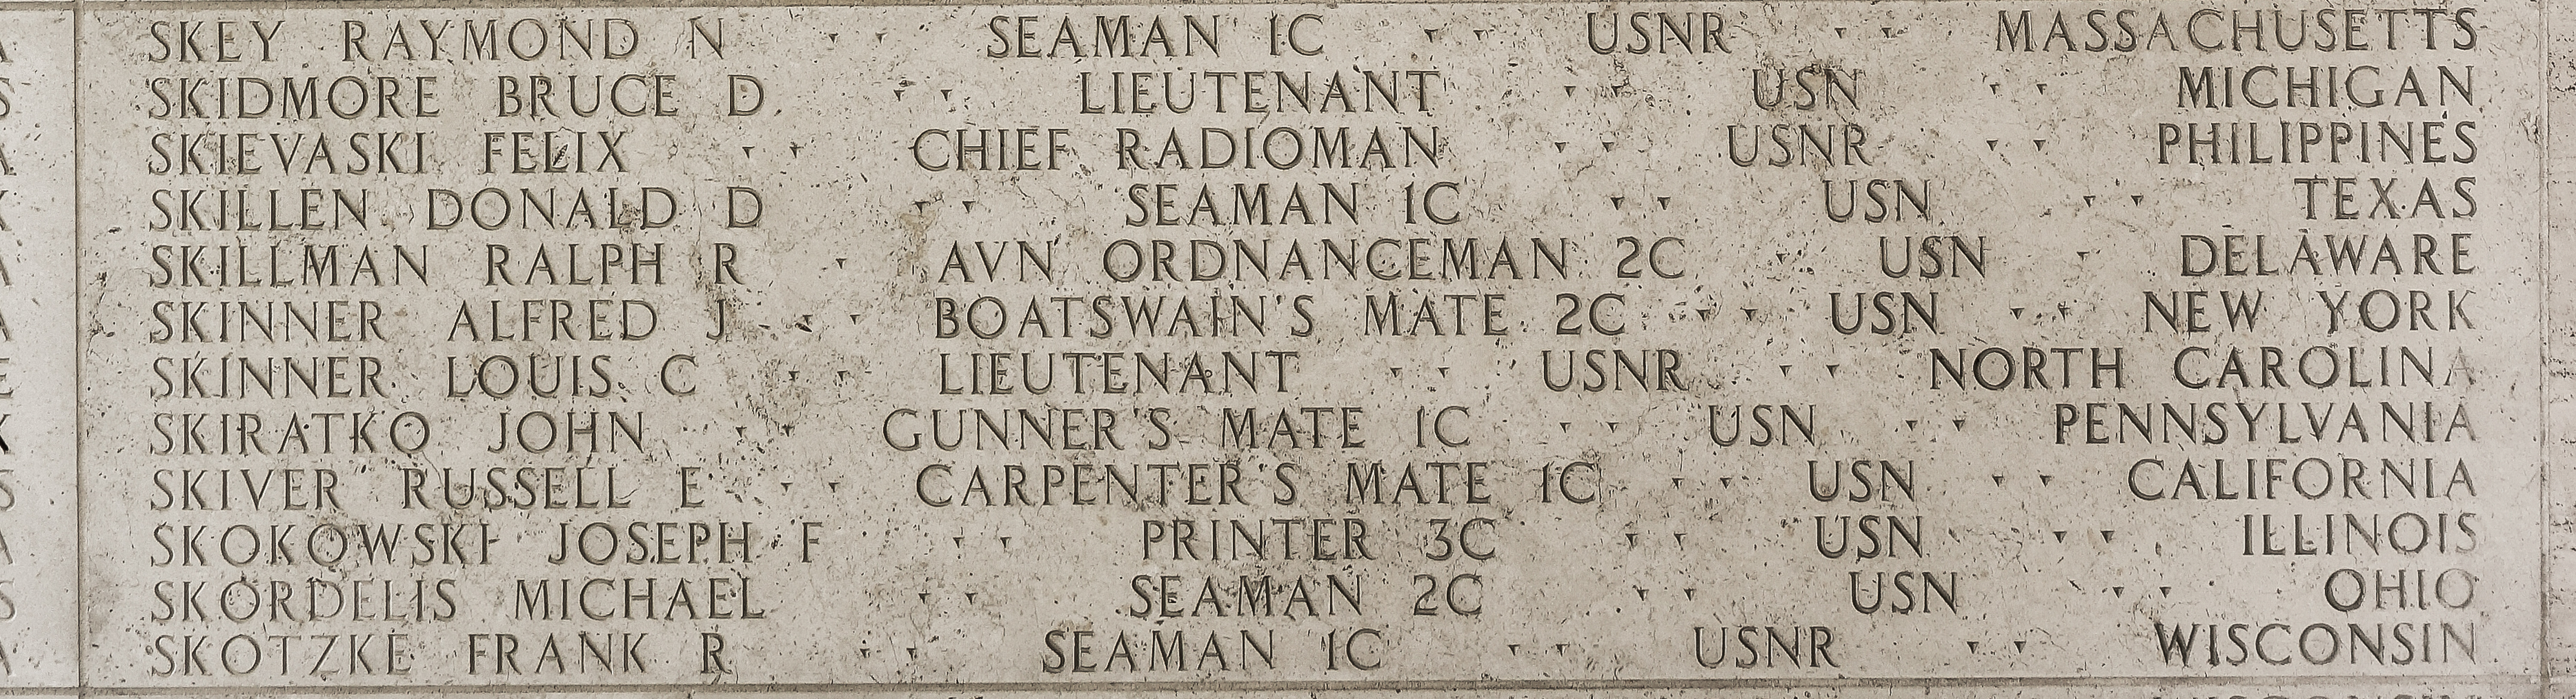 Alfred J. Skinner, Boatswain's Mate Second Class